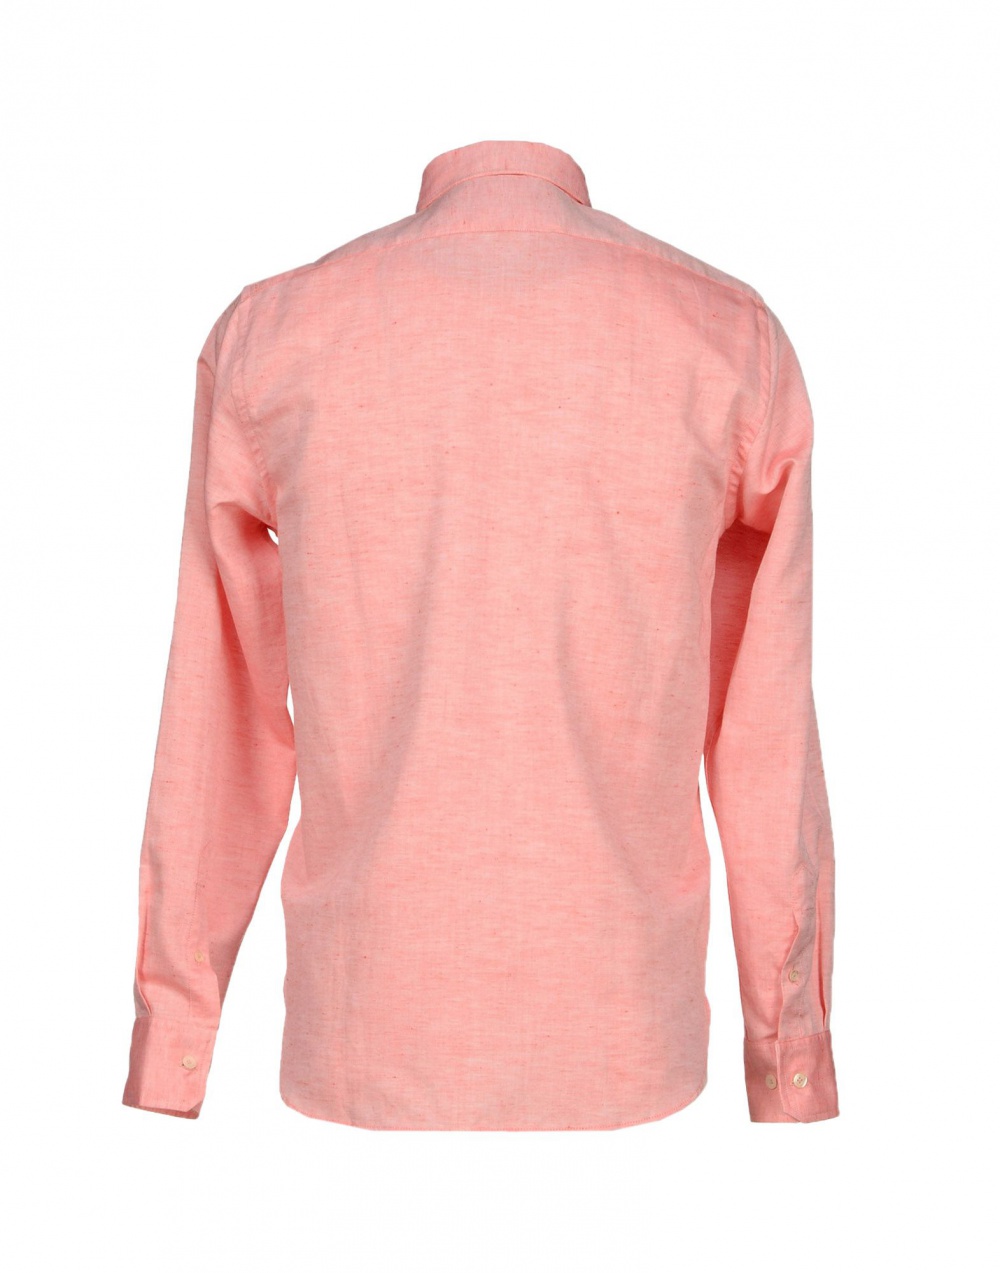 Рубашка мужская Dolores Promesas, размер S, коралловый